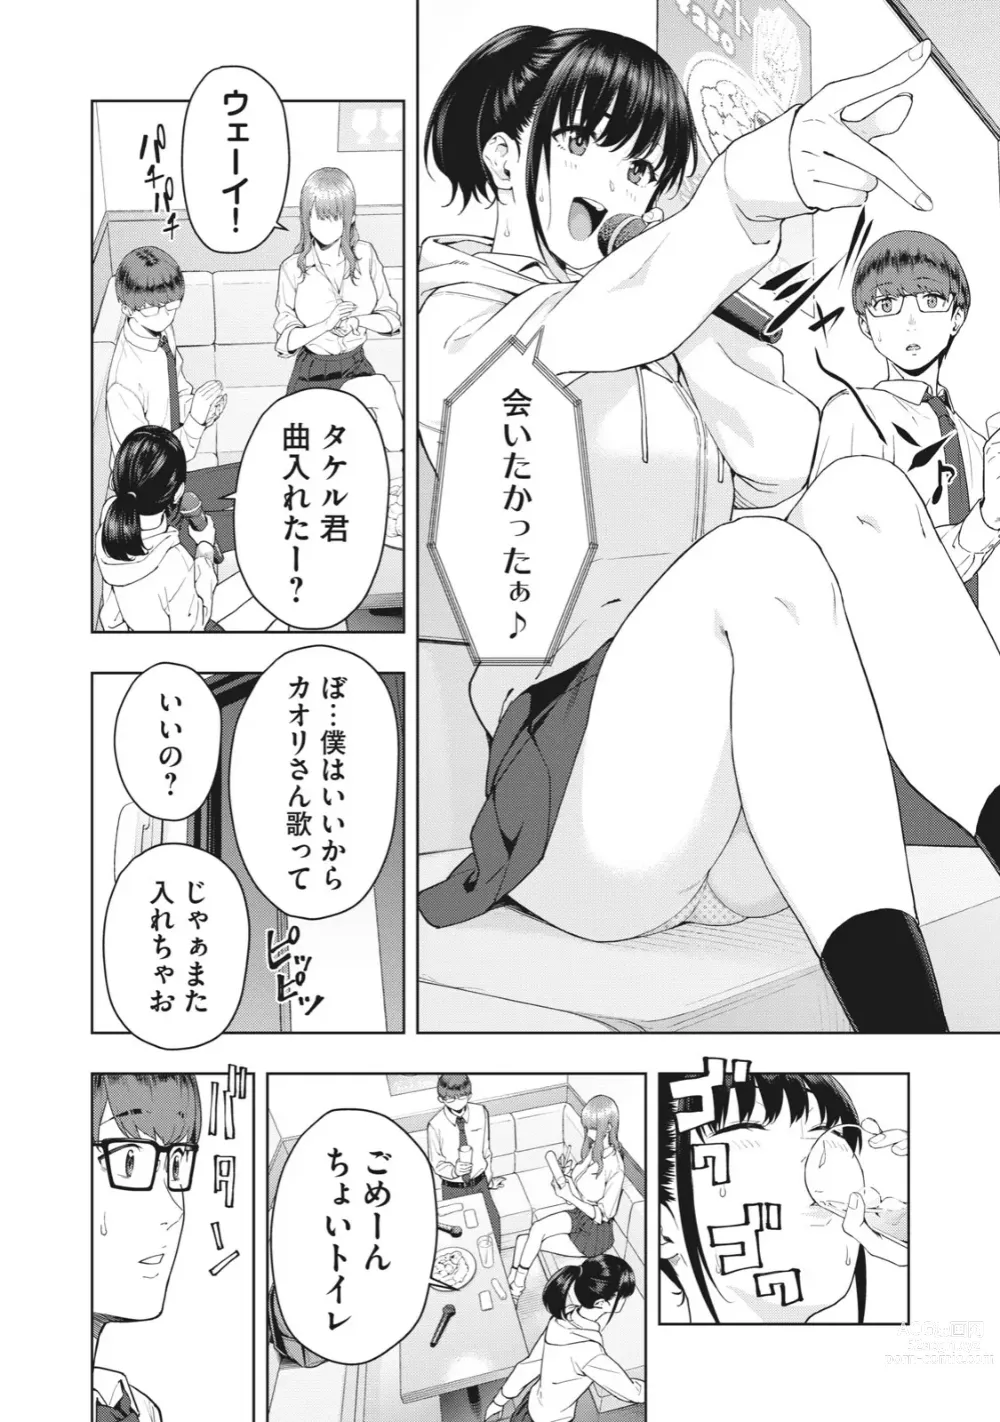 Page 5 of manga Kanojo no Tomodachi